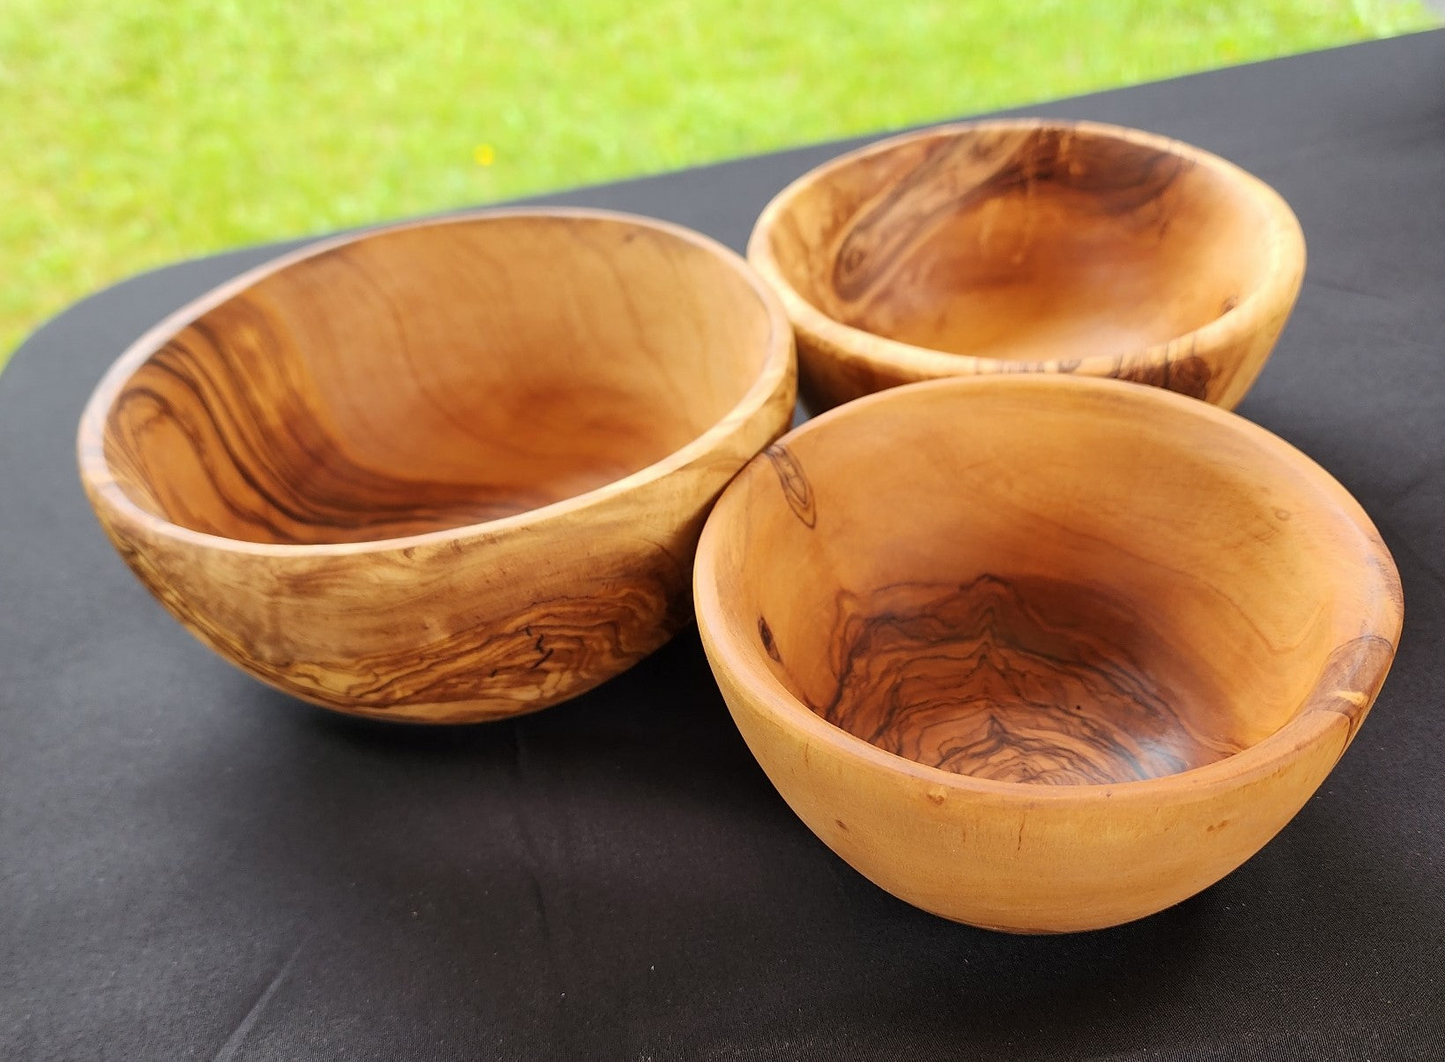 OLIVIKO 100% Handmade Olive Wood Kit - Set of 3 Bowls: Salad Bowl, Snack Bowl - Sizes 12cm, 14cm, and 16cm